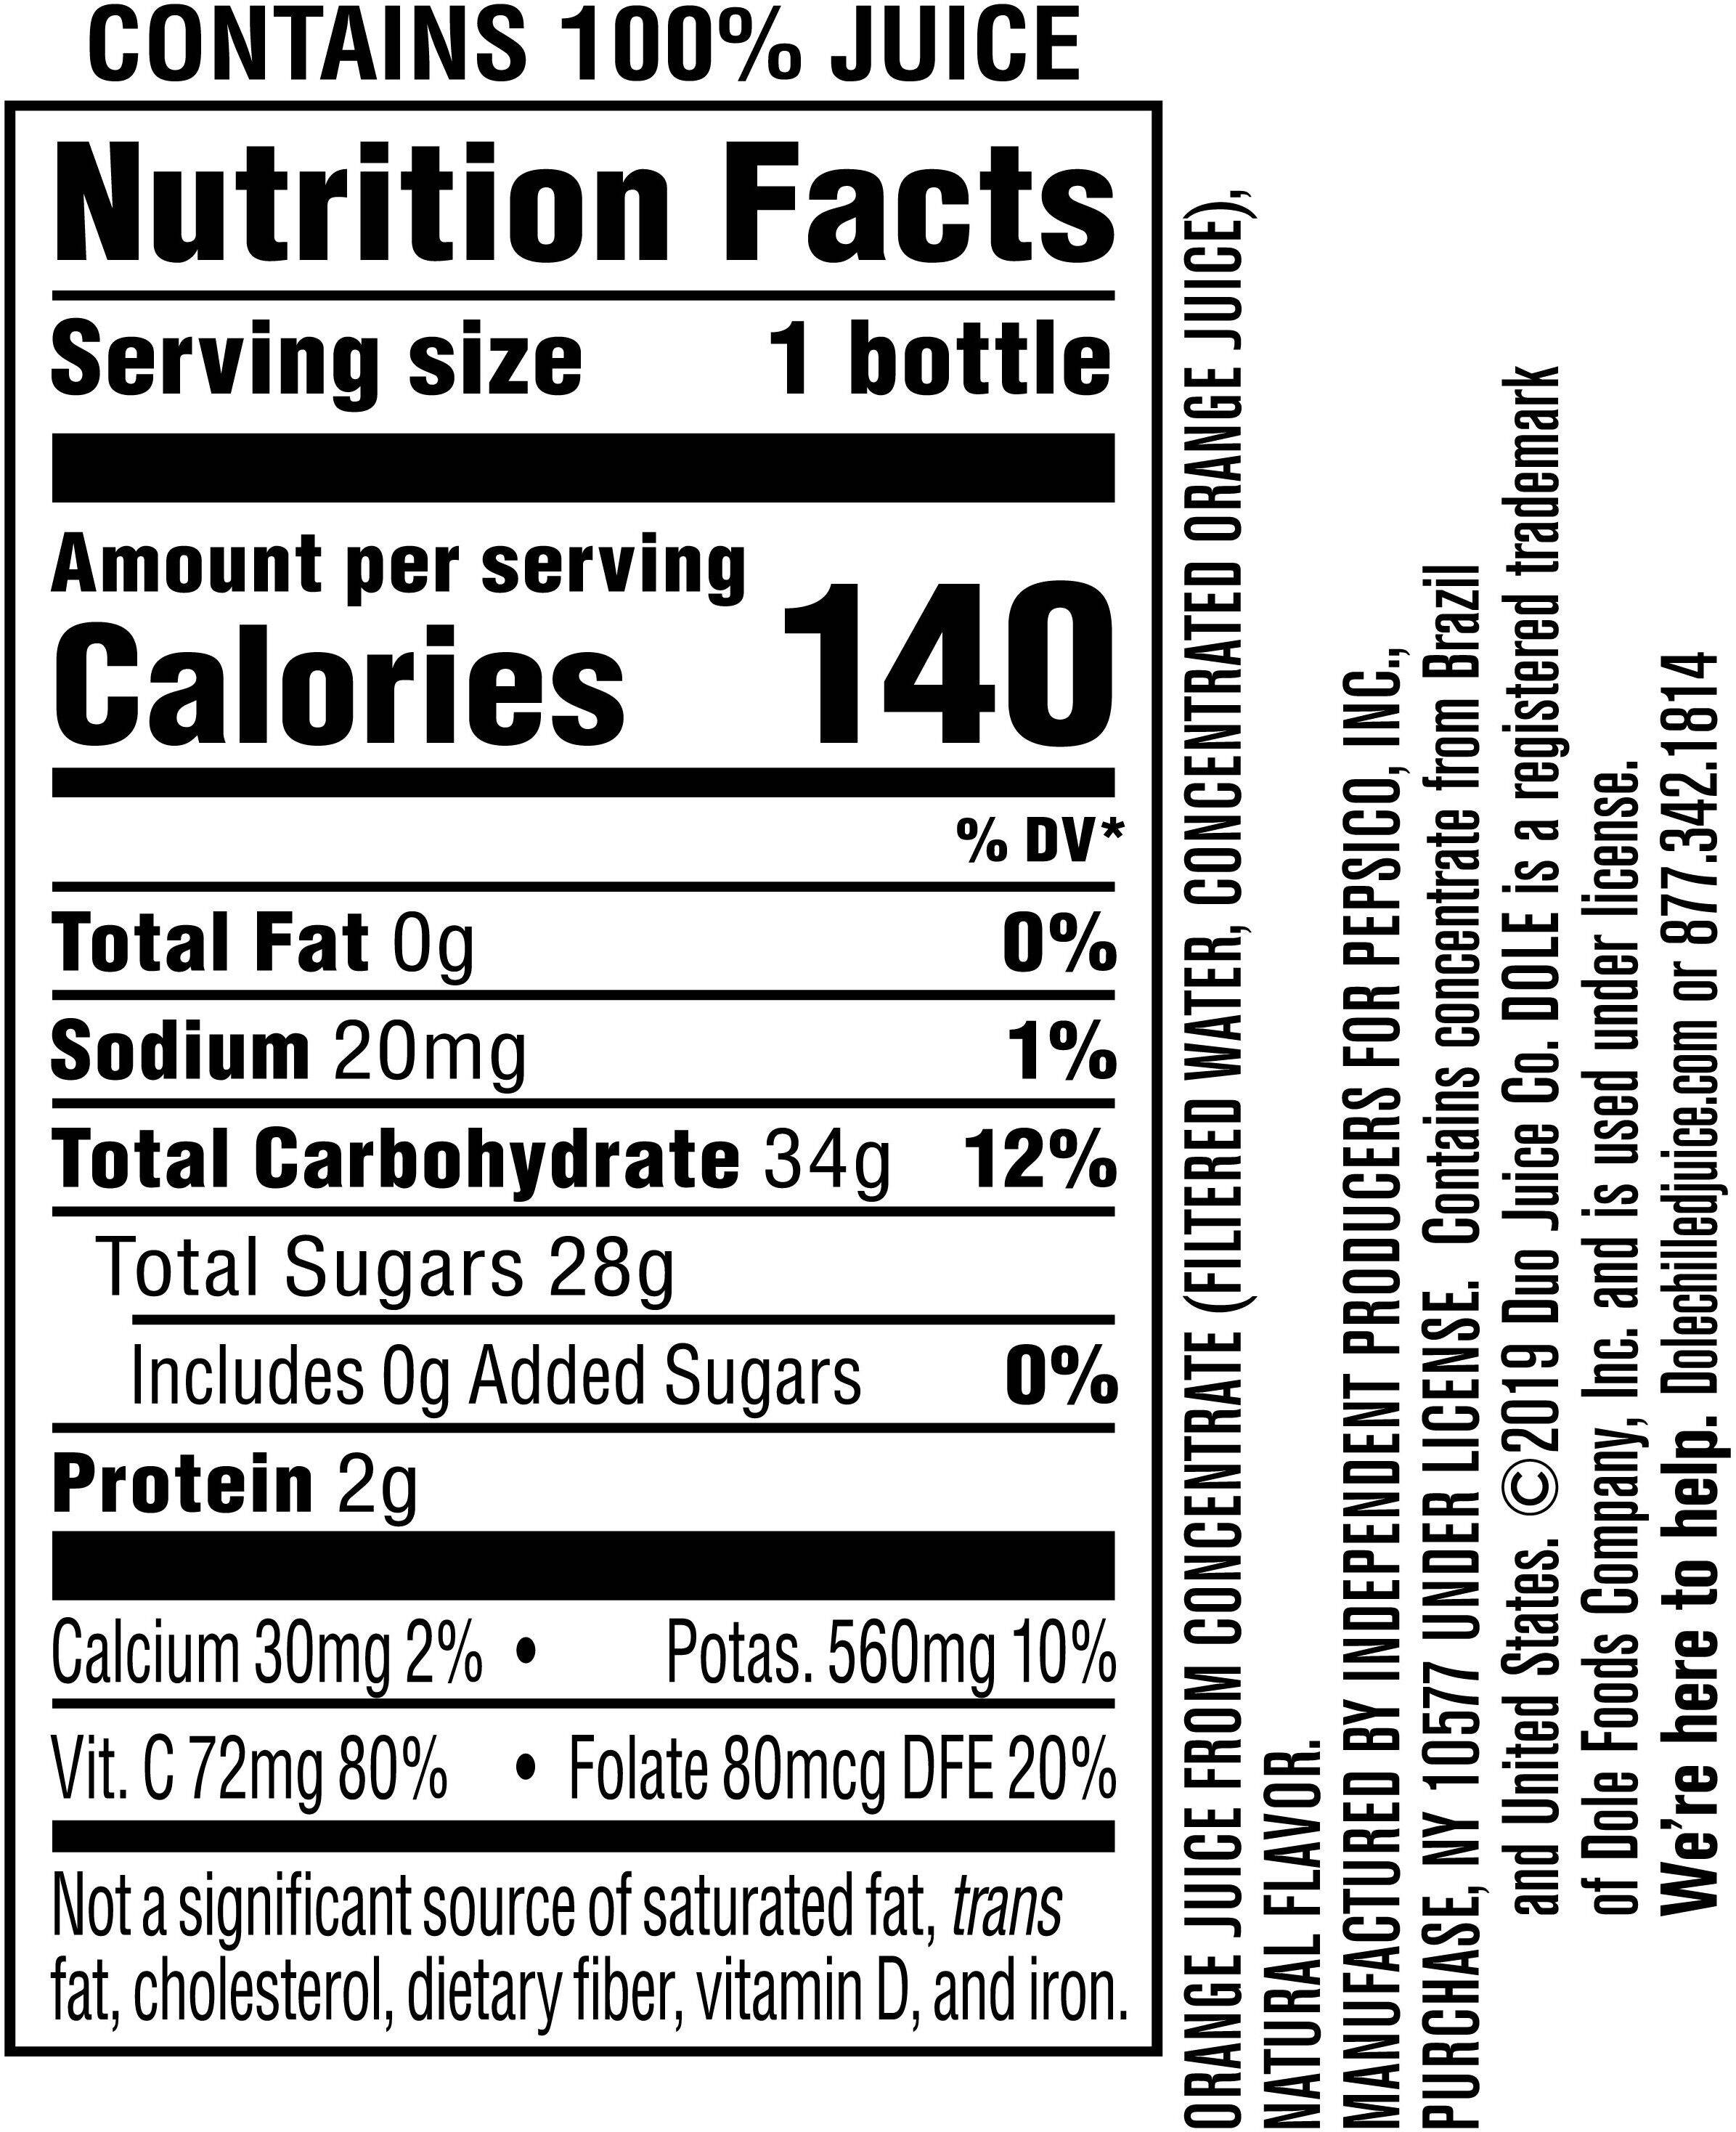 Image describing nutrition information for product Dole Plus Orange Juice